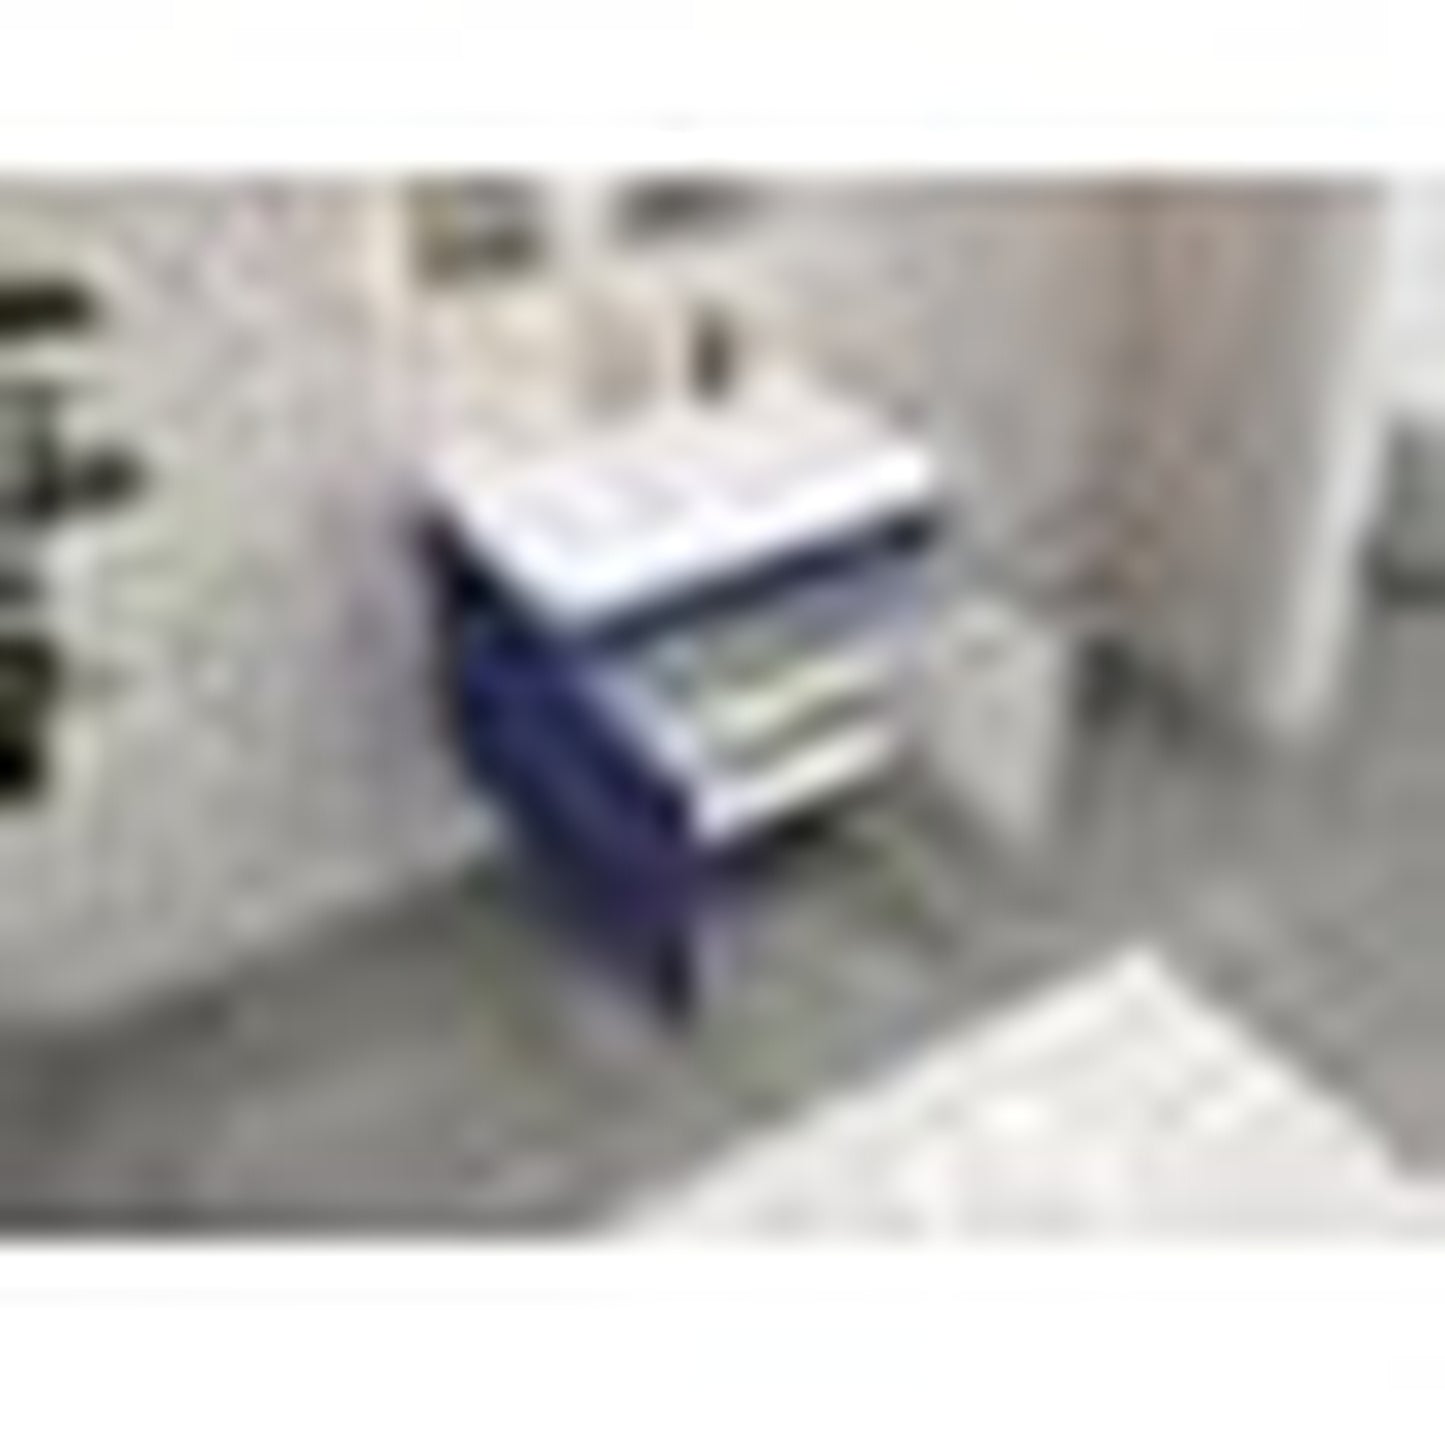 Moreno Bath ELSA 30" High Gloss Night Blue Wall-Mounted Vanity With Single Reinforced White Acrylic Sink